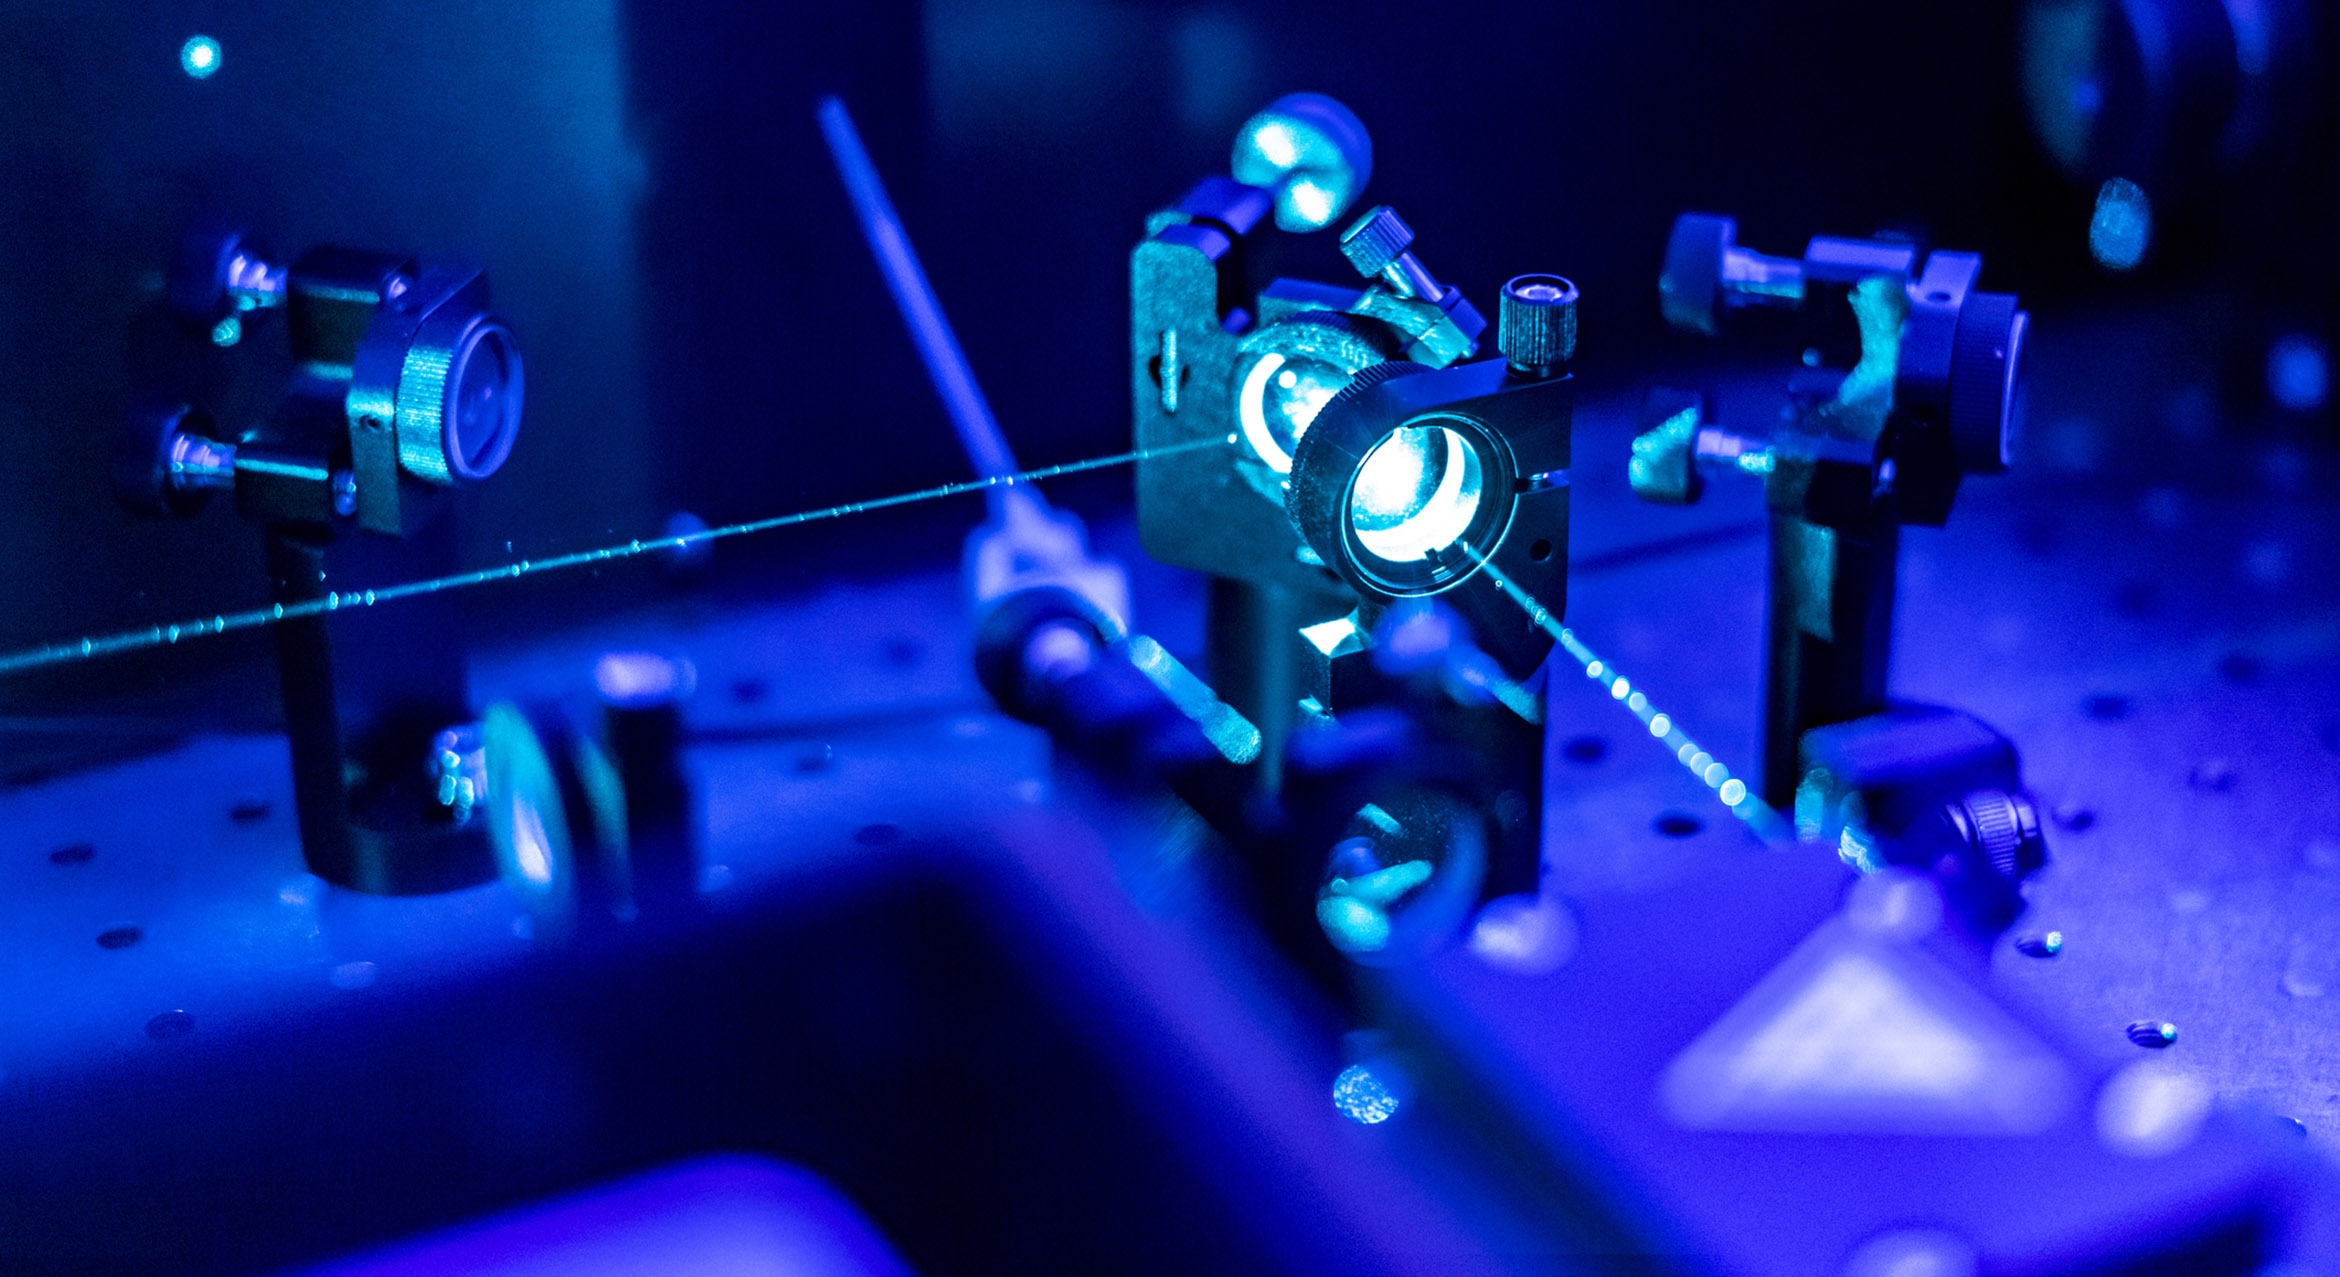 Laser reflect on optic table un quantum laboratory